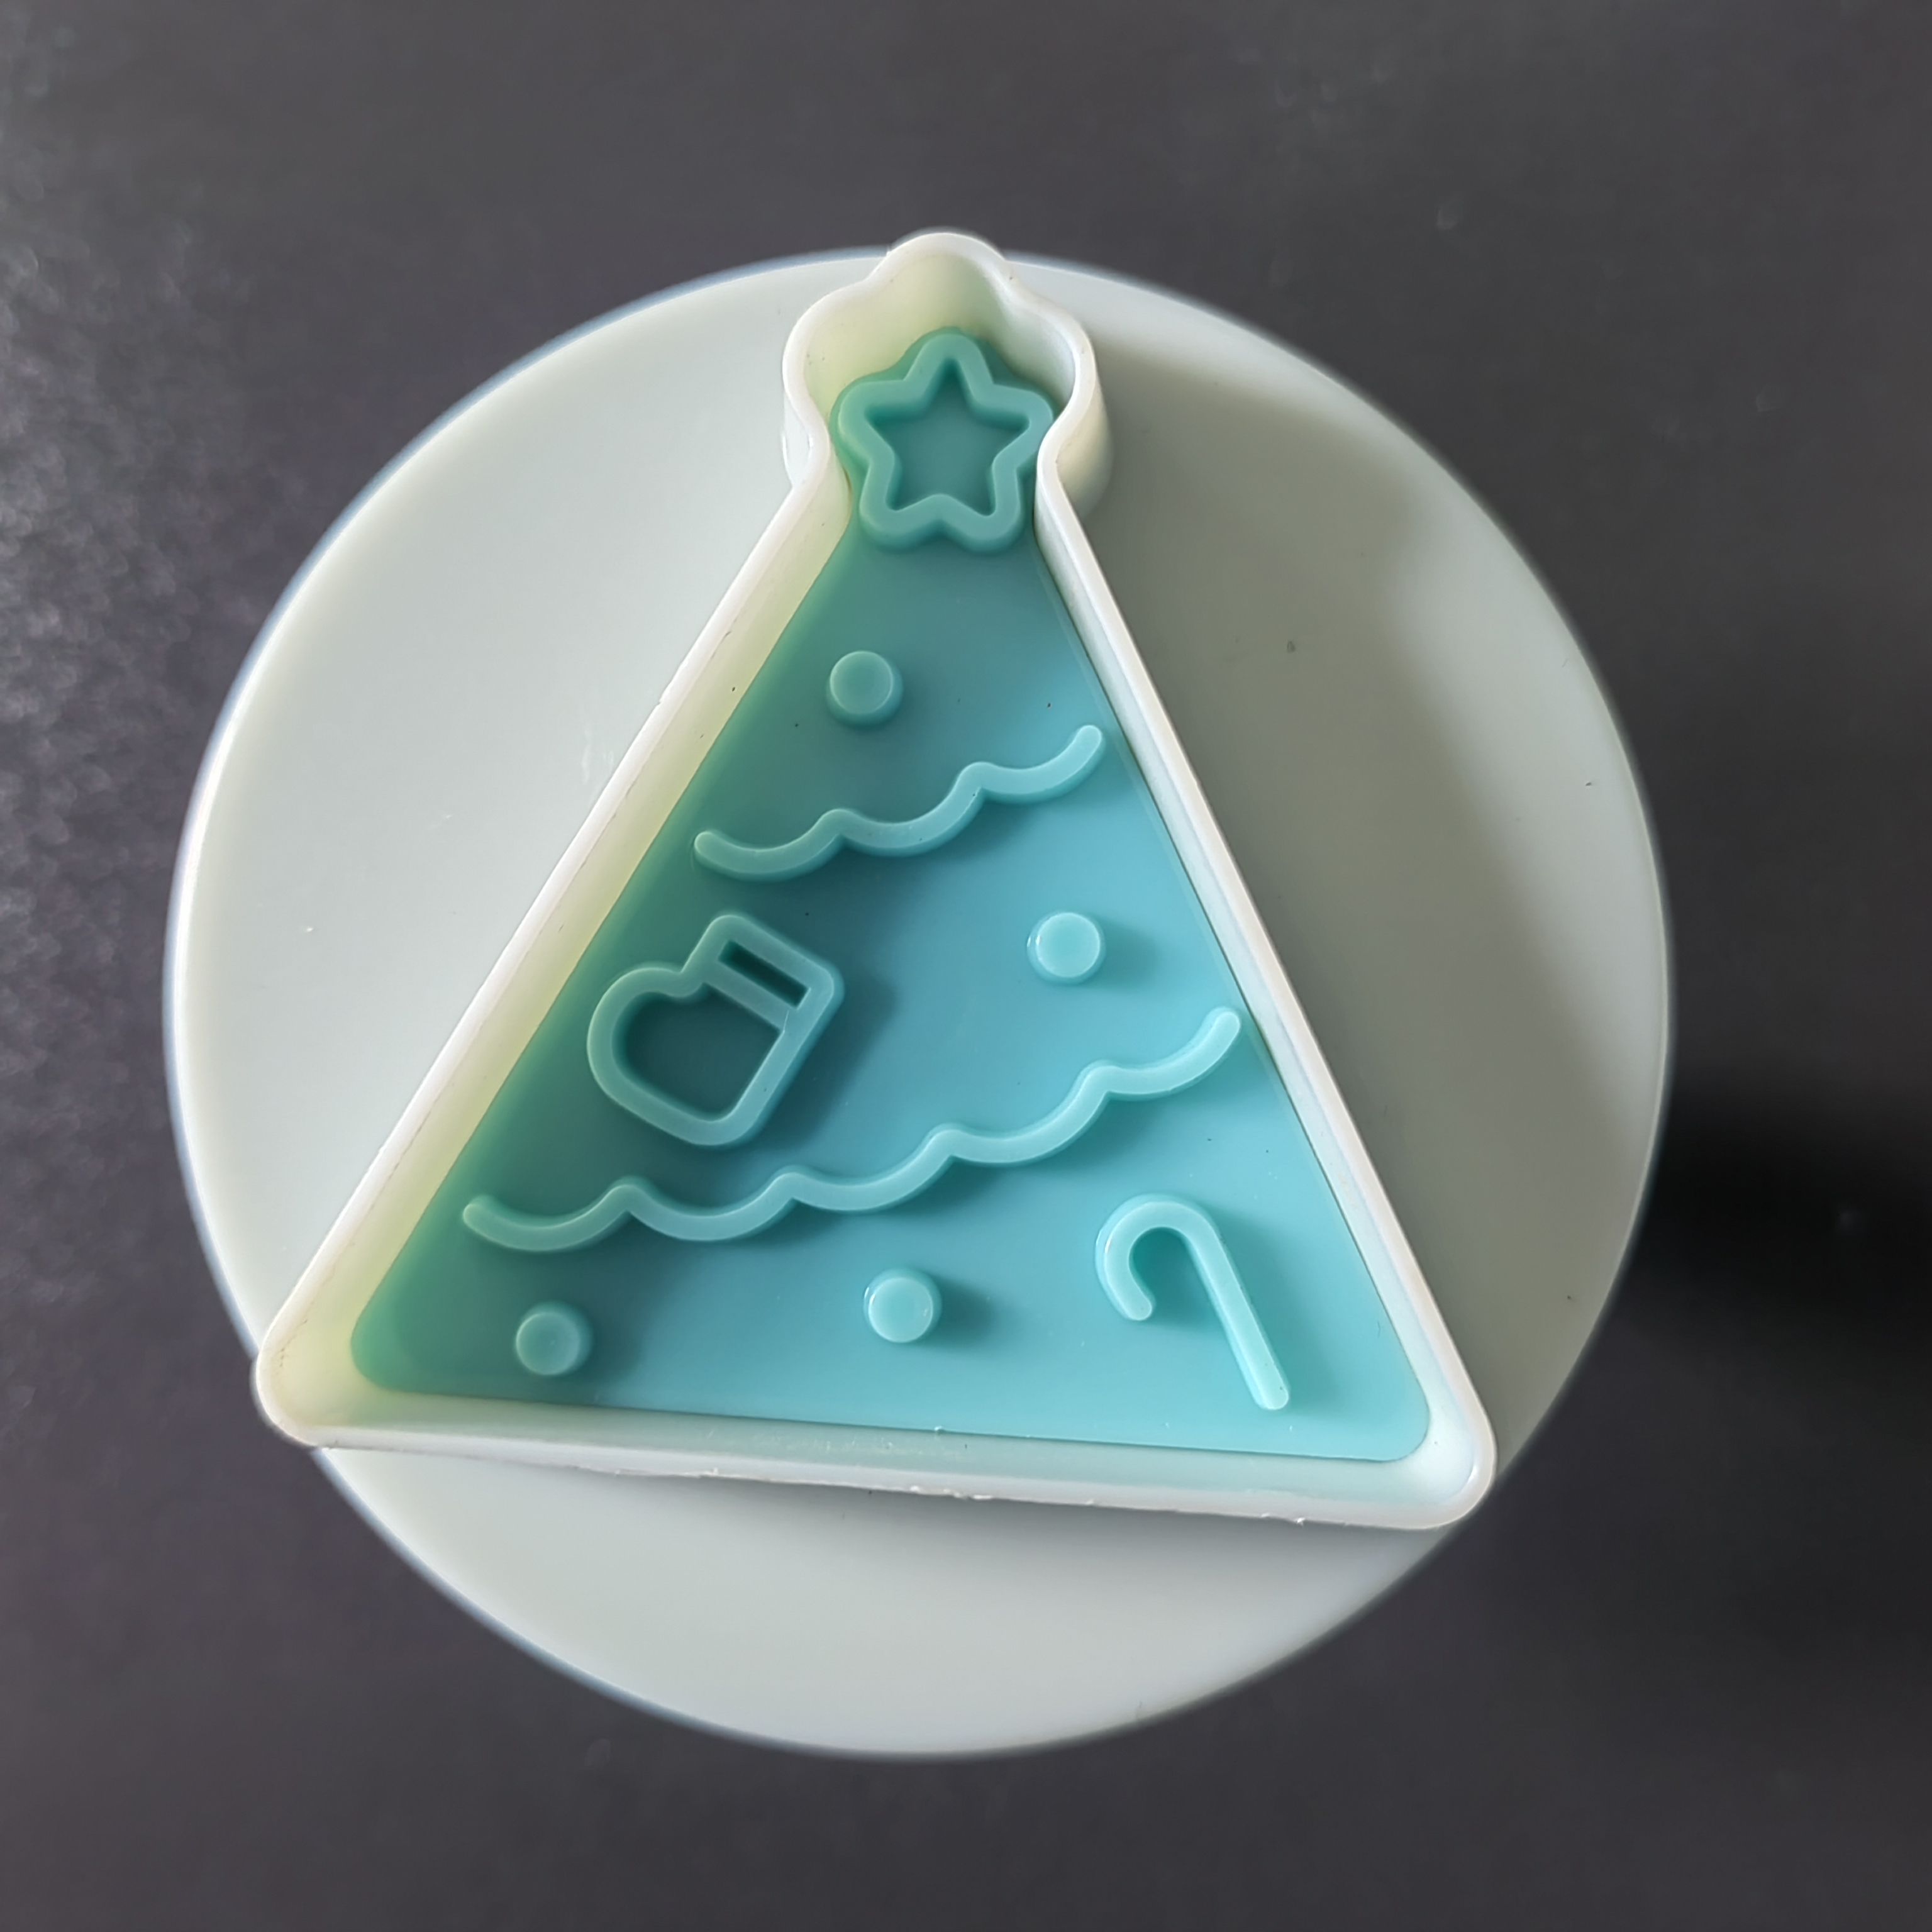 HB0151-3 Plastic 3pcs Christmas Series Cookie Molds set